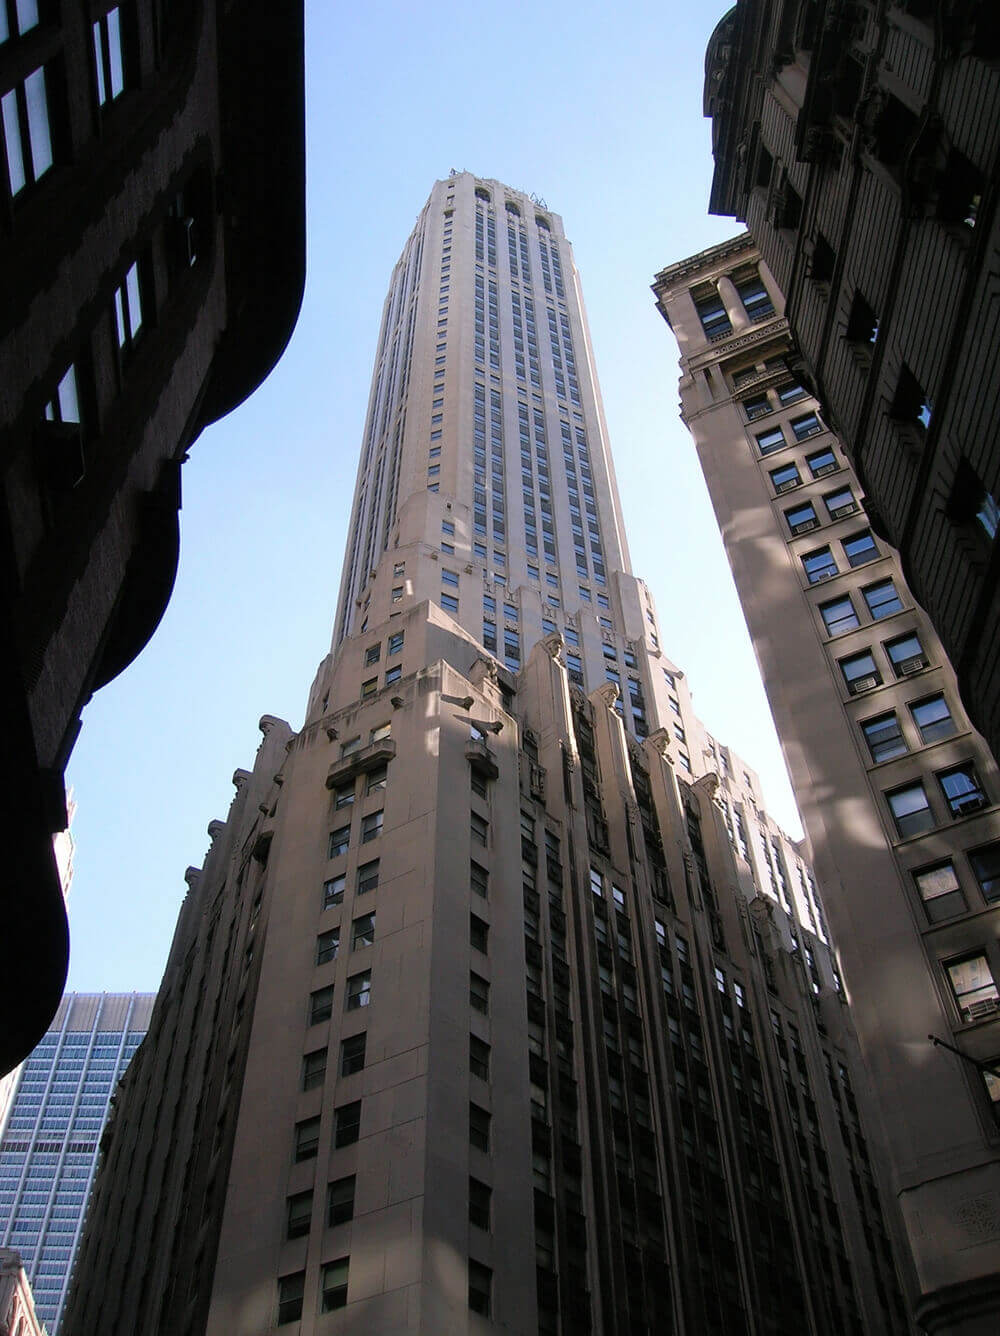 New York's 20 Exchange Place. Image Source: PropertyShark.